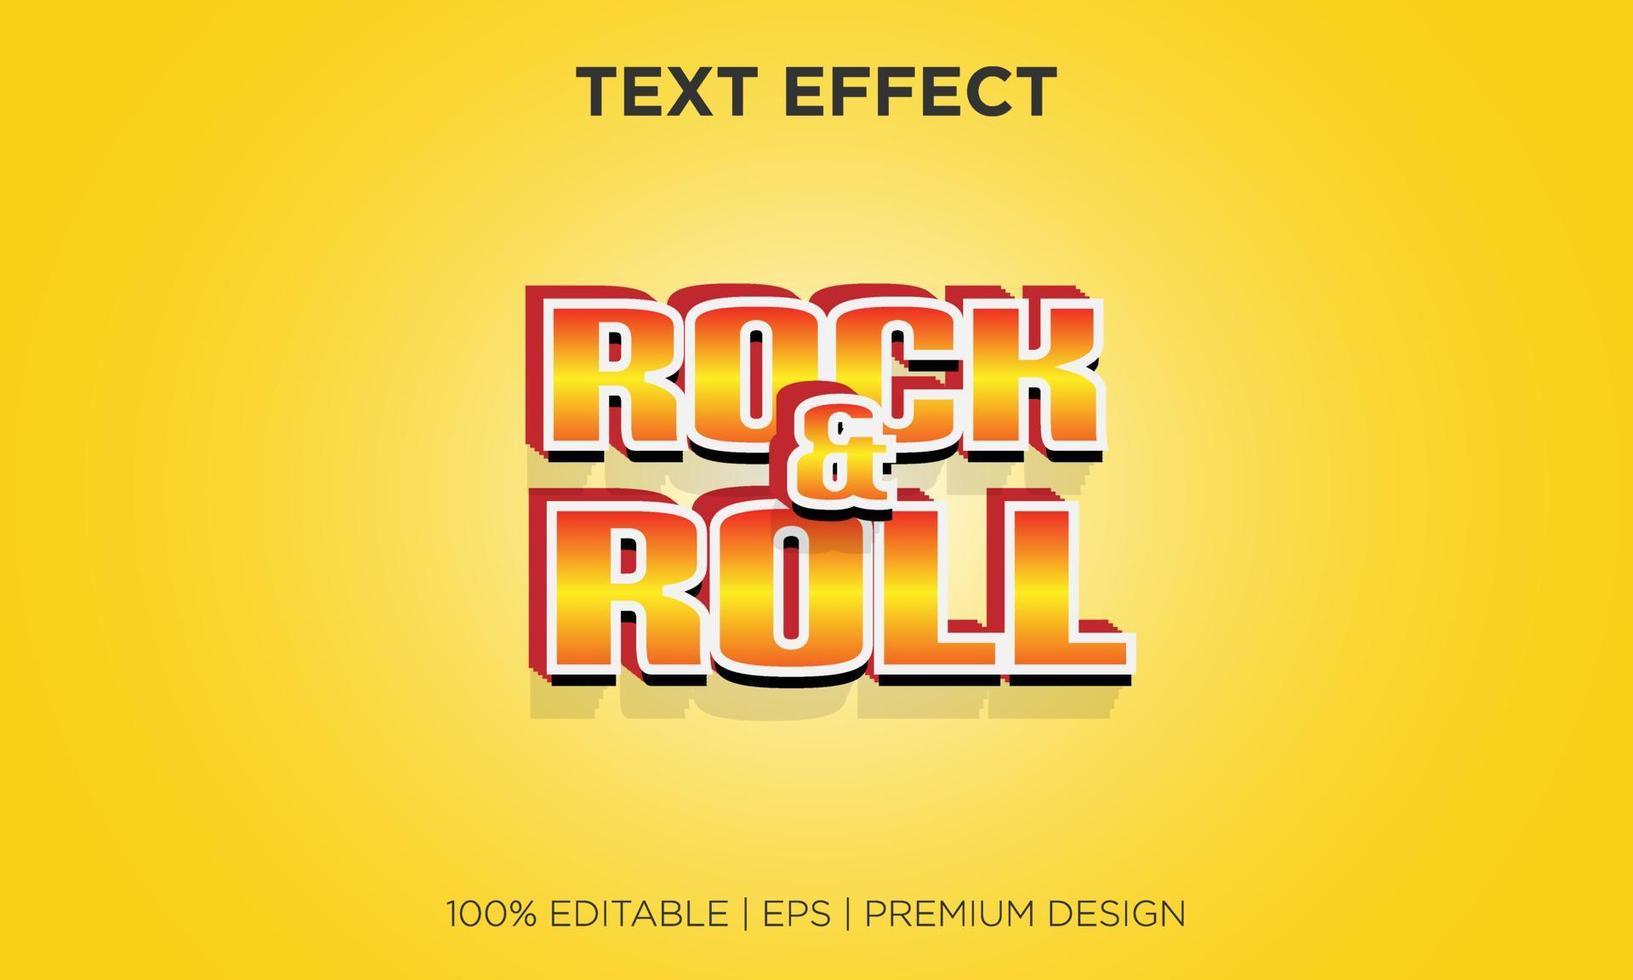 efecto de texto estilo editable rock and roll vector